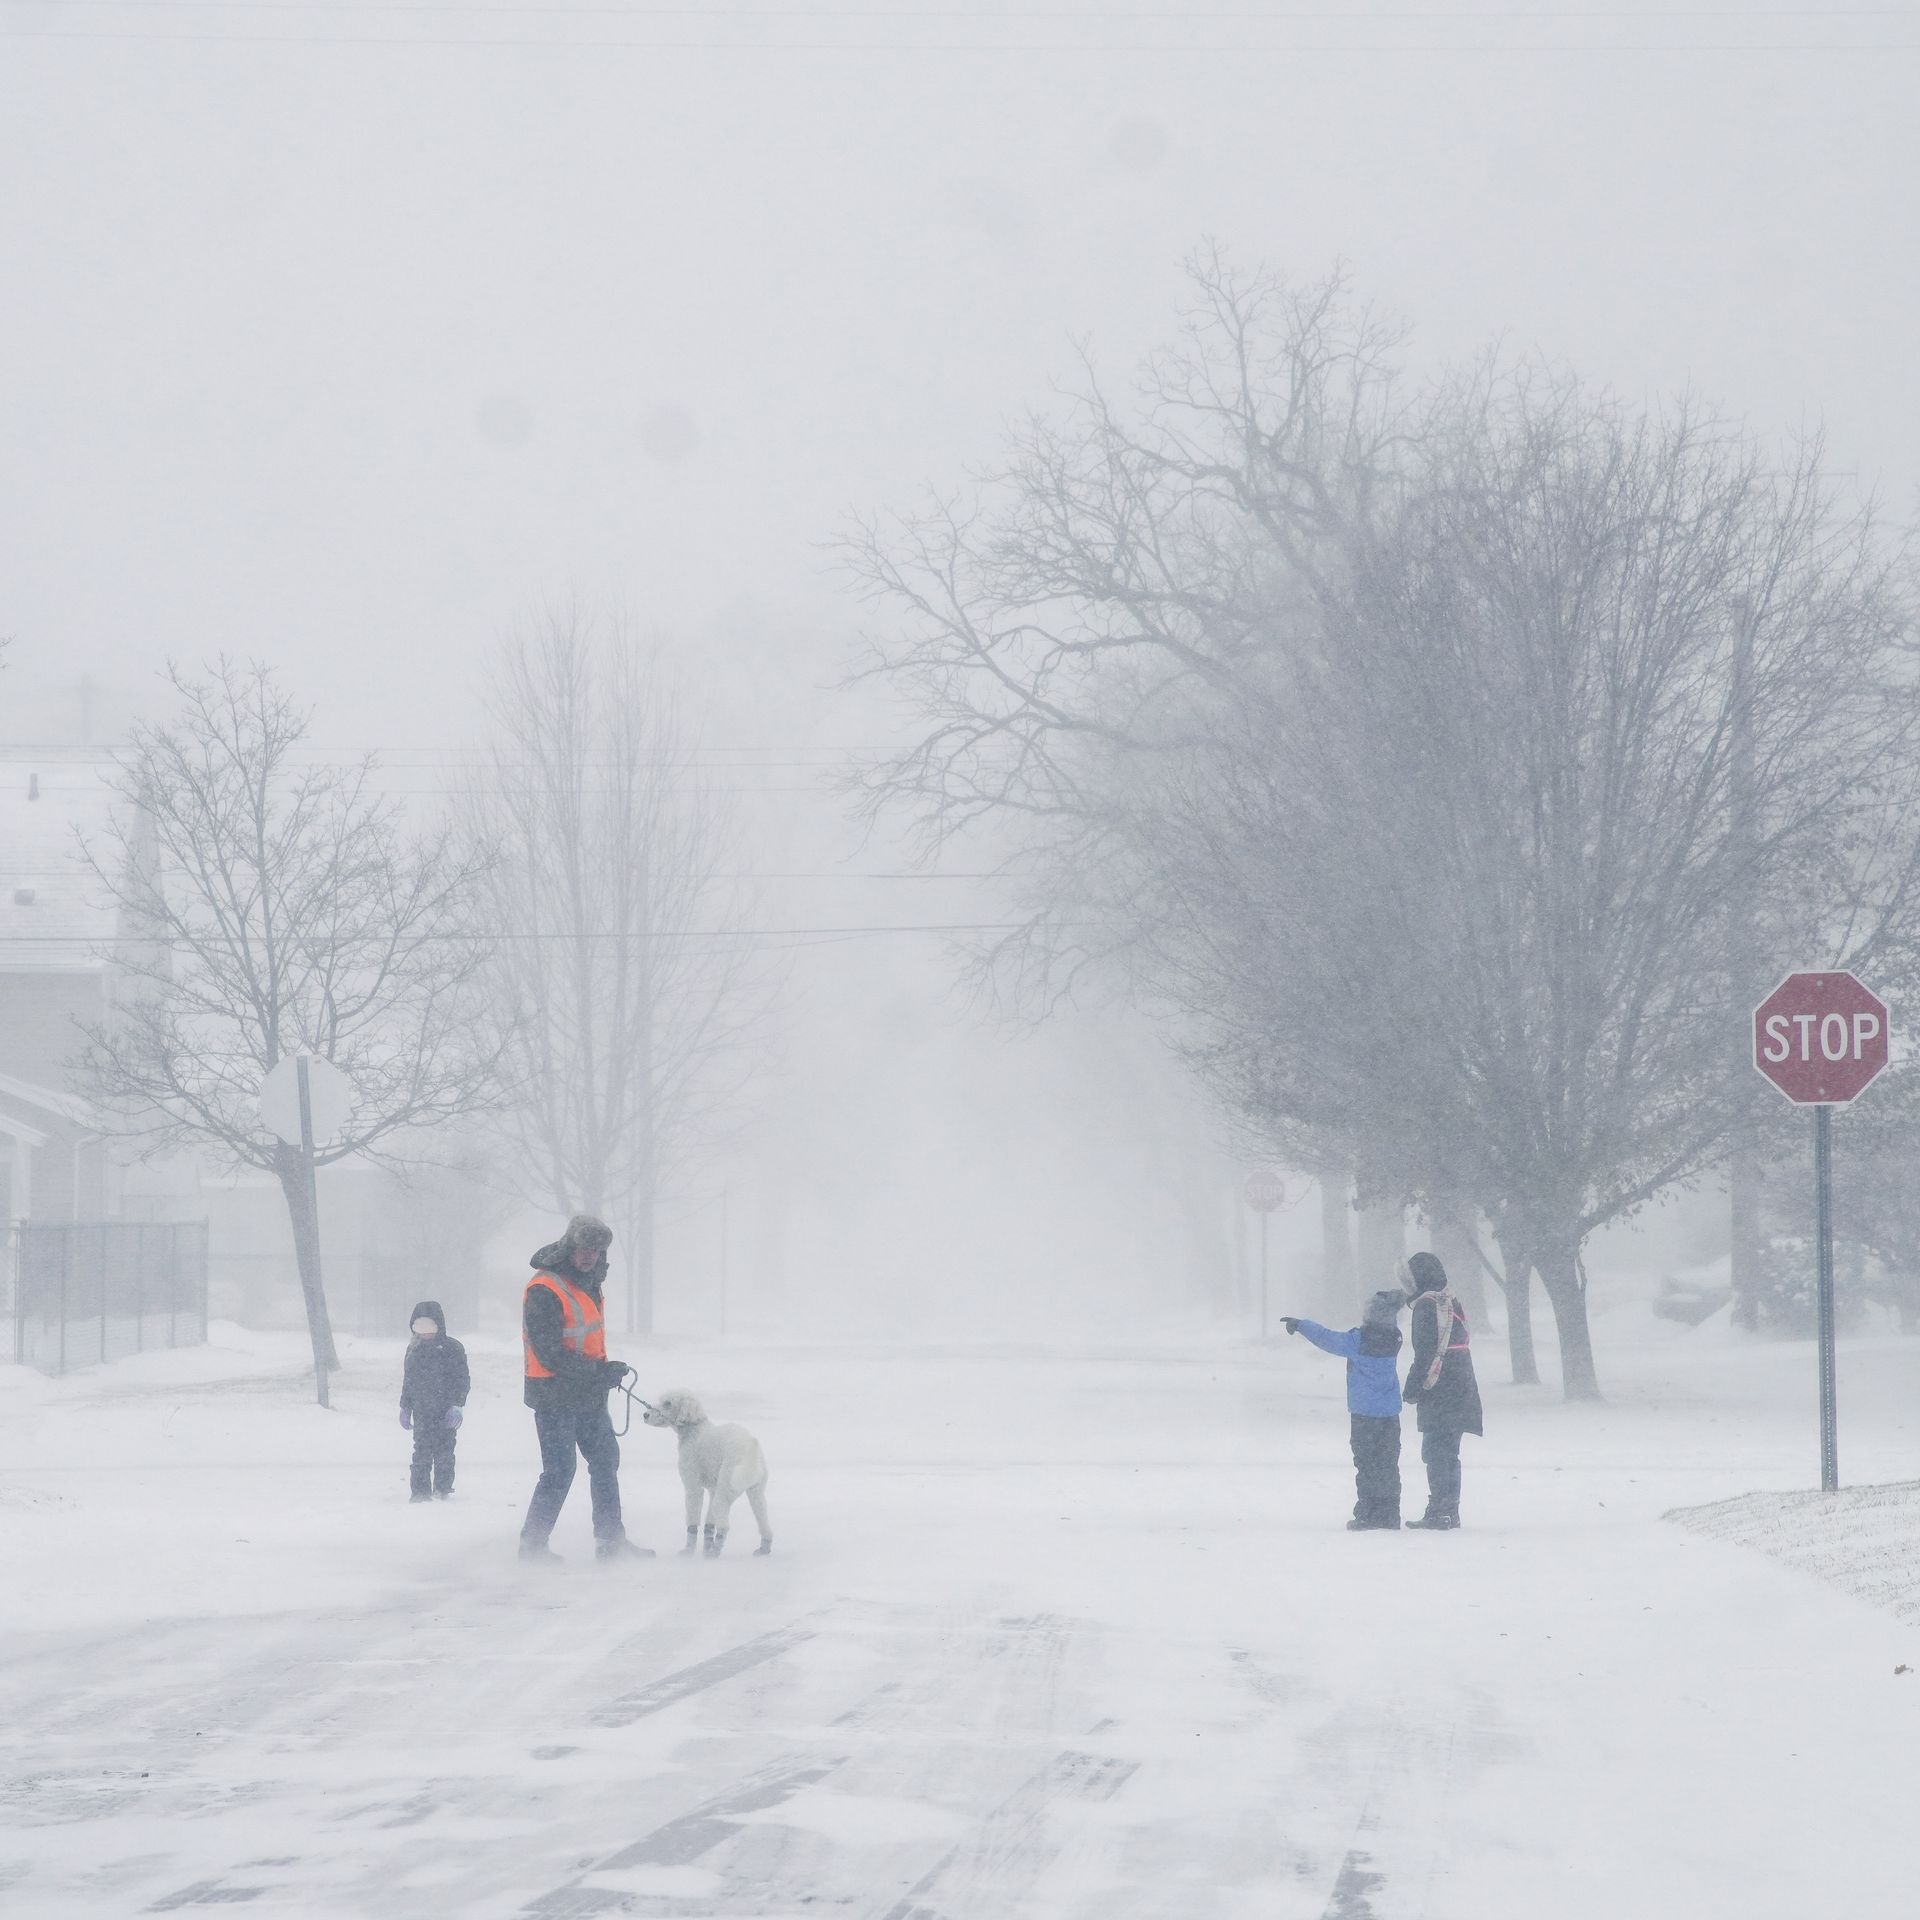 Chicago winter storm brings heavy snow, frigid temps